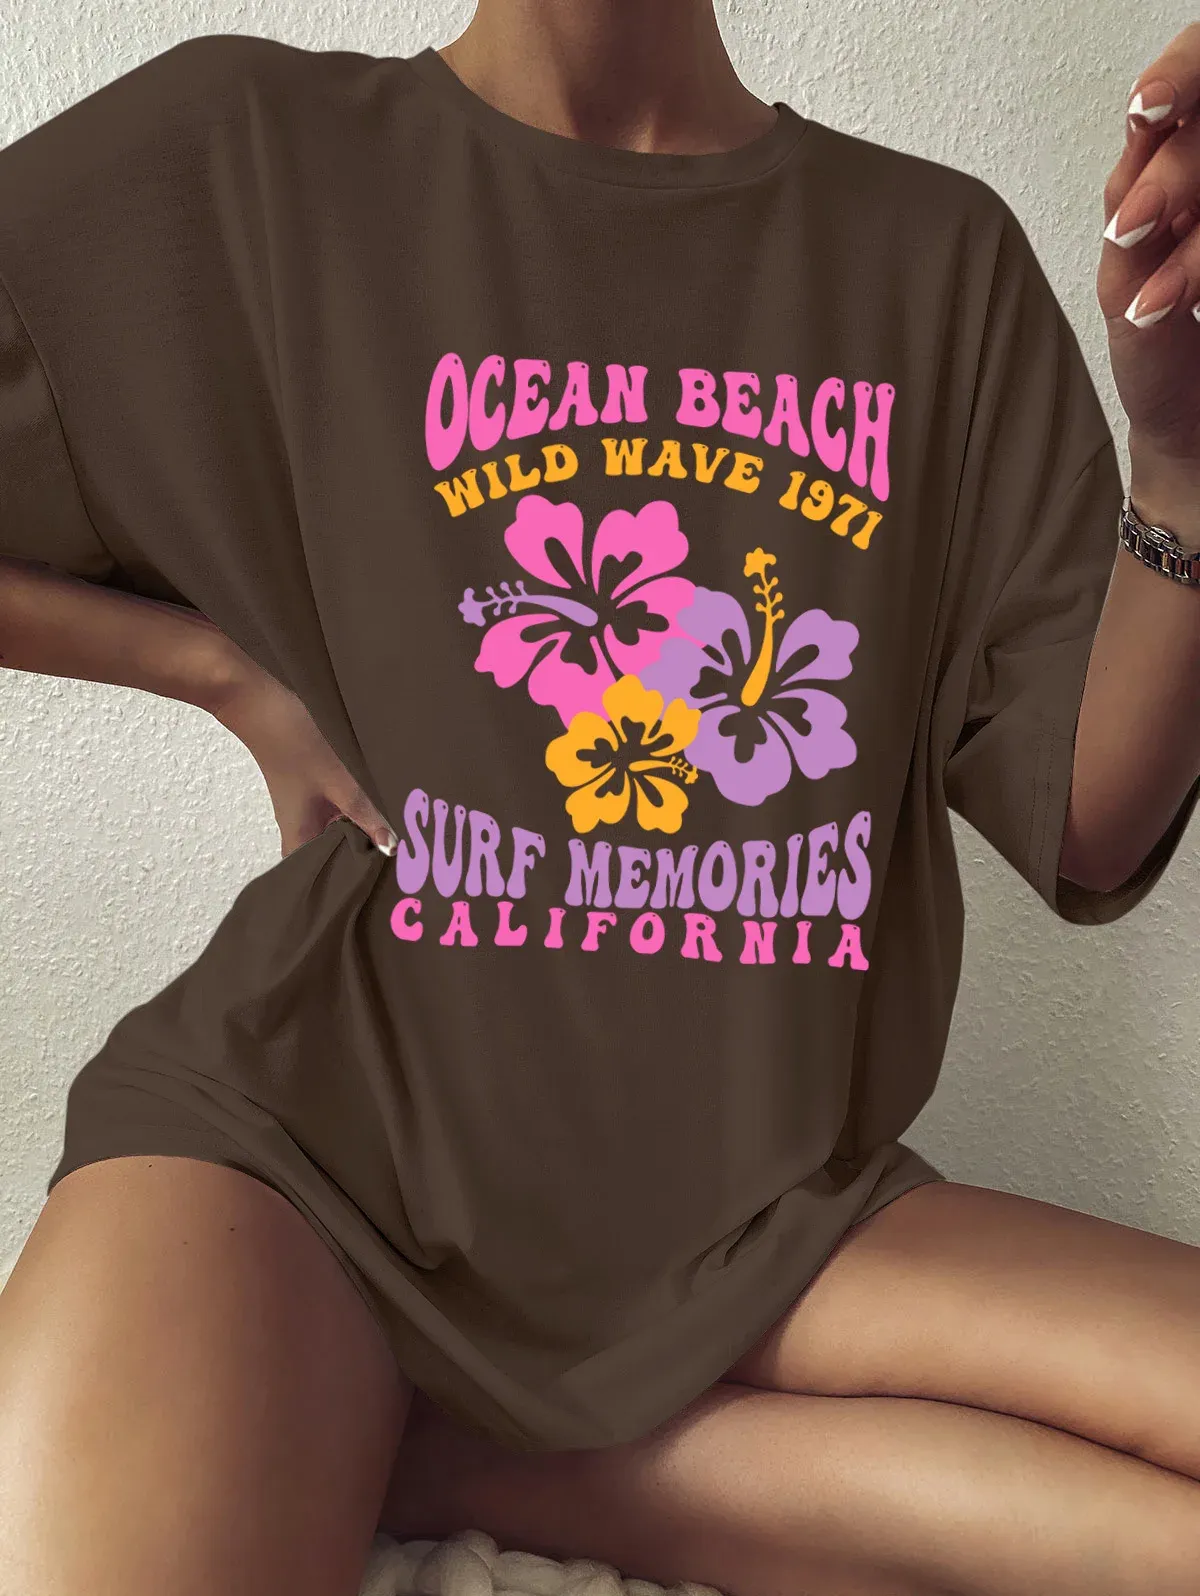 Camiseta Ocean Beach Wild Wave 1971 Surf Memories camiseta extragrande estilo veraniego Camiseta holgada mujer moda Casual 100% algodón estética Top